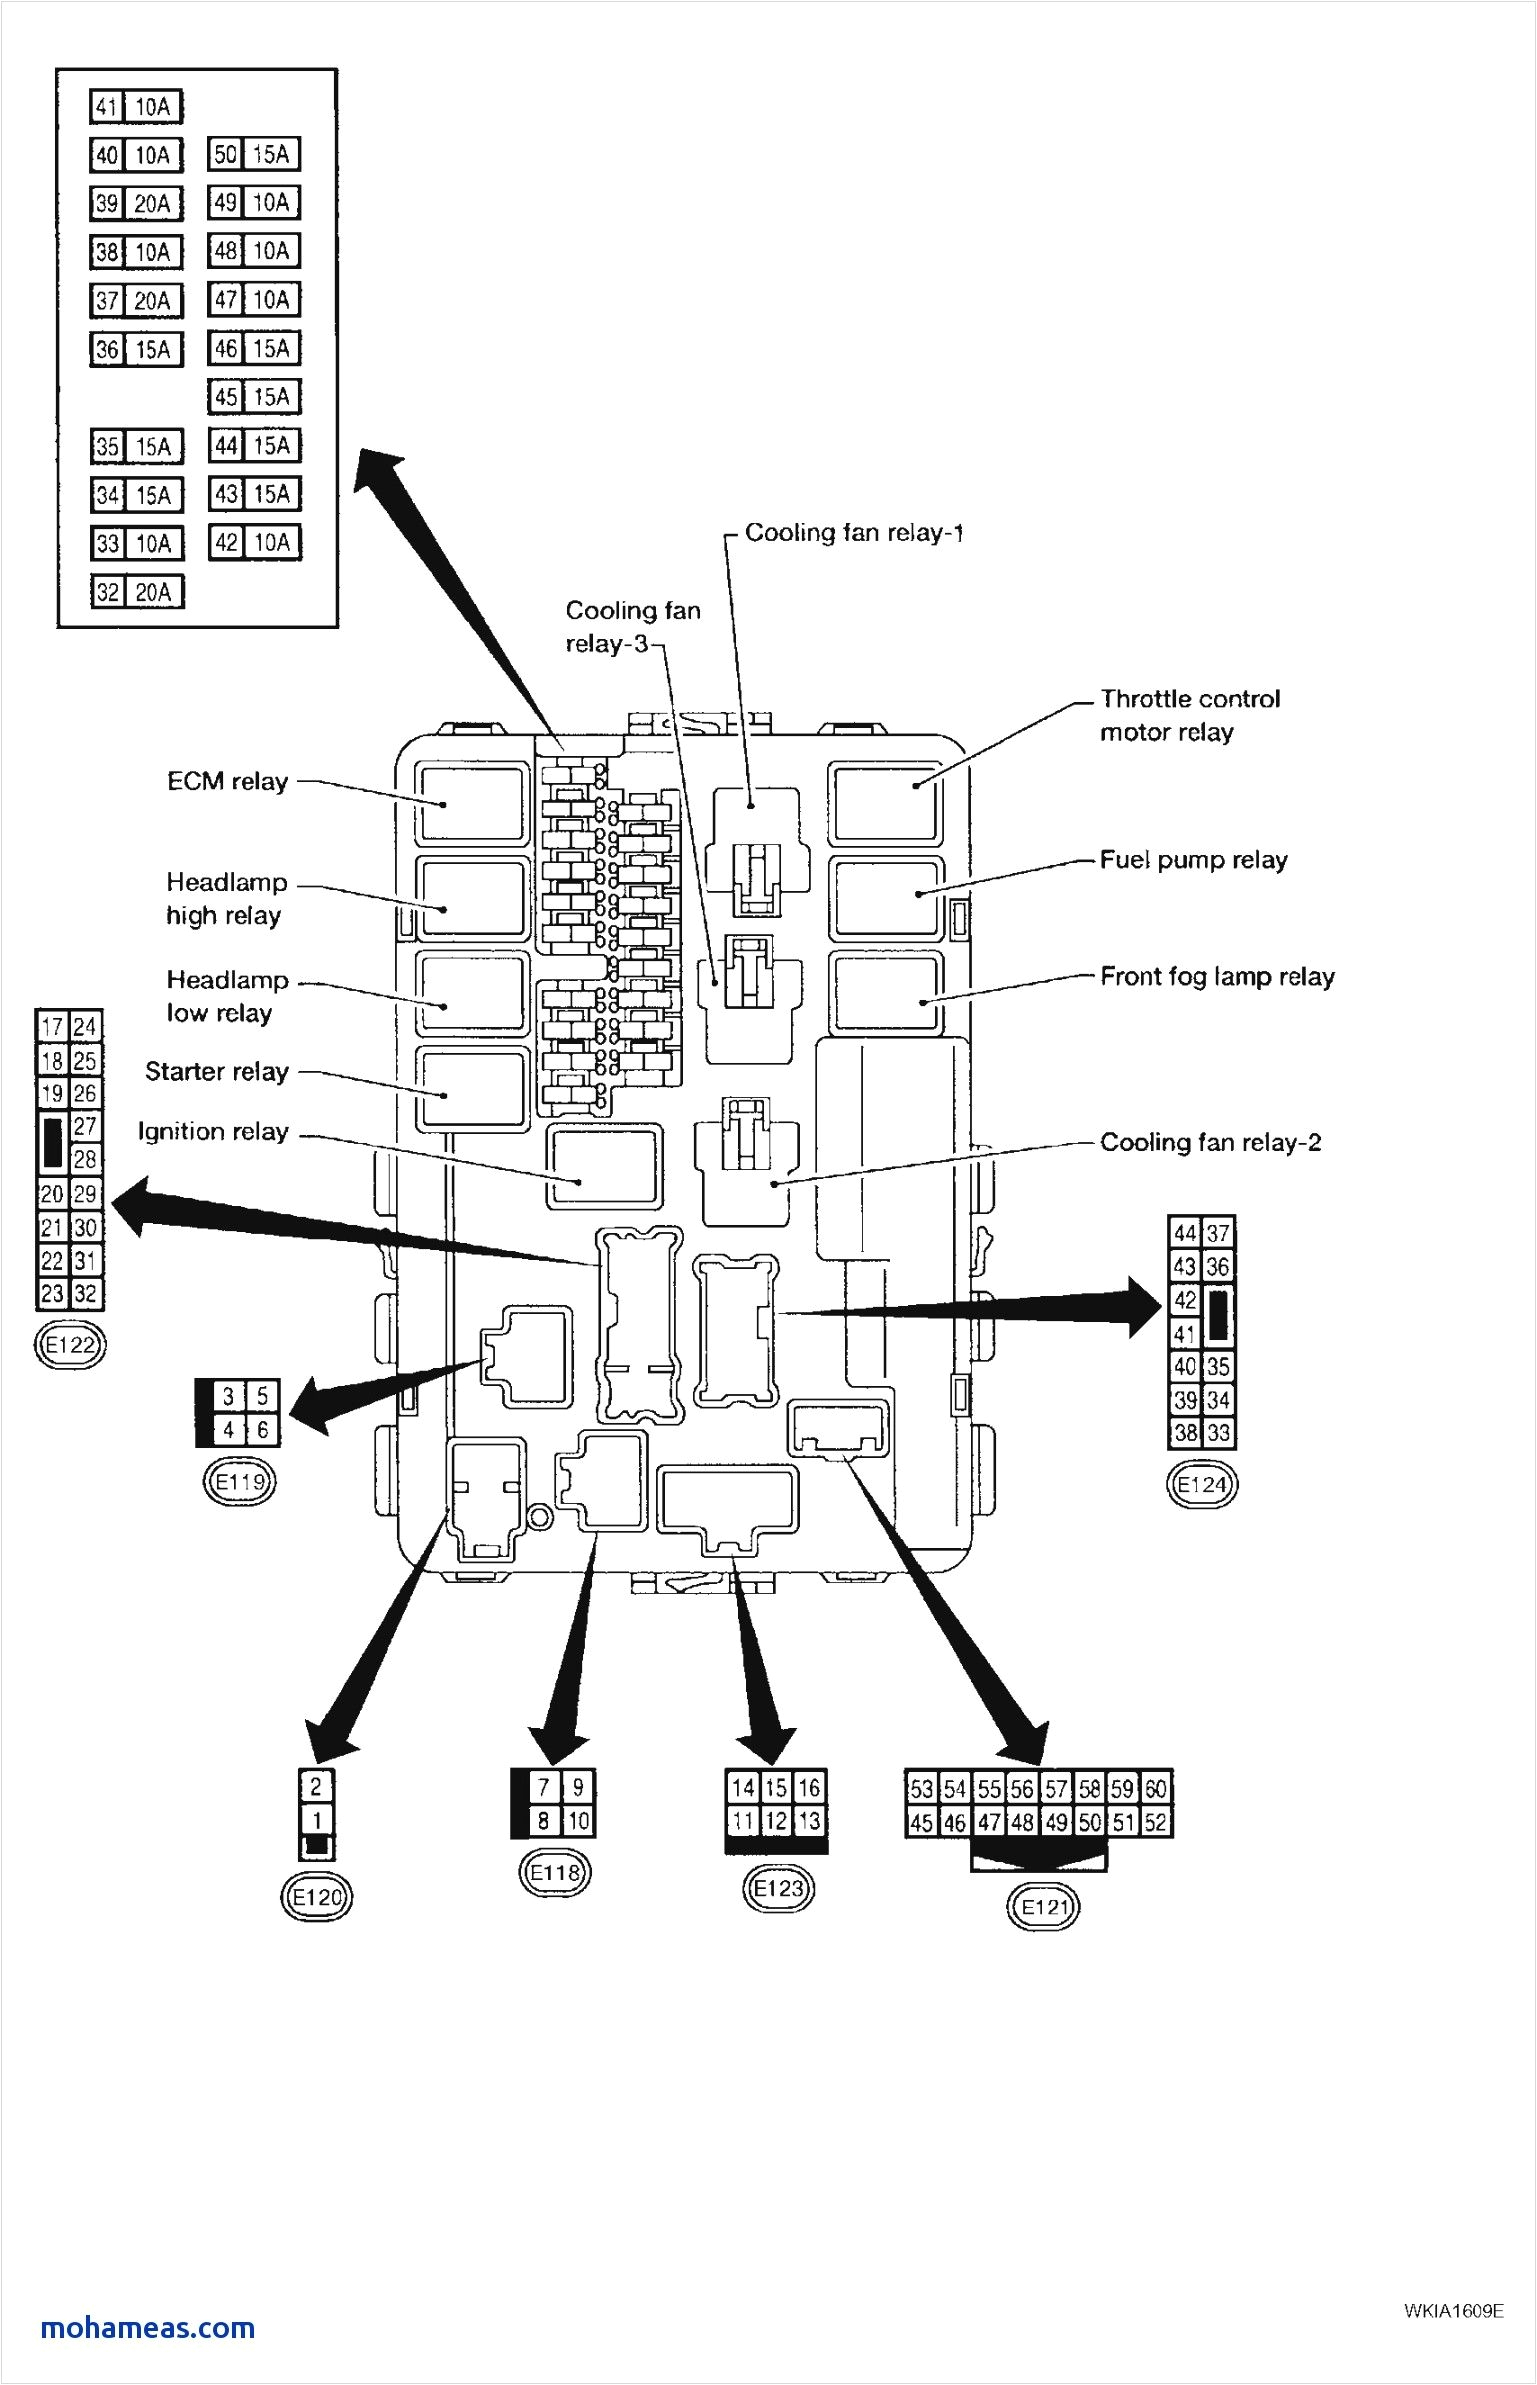 2009 nissan maxima fuse box wiring diagram img 2011 nissan maxima ac wiring diagram 2006 nissan